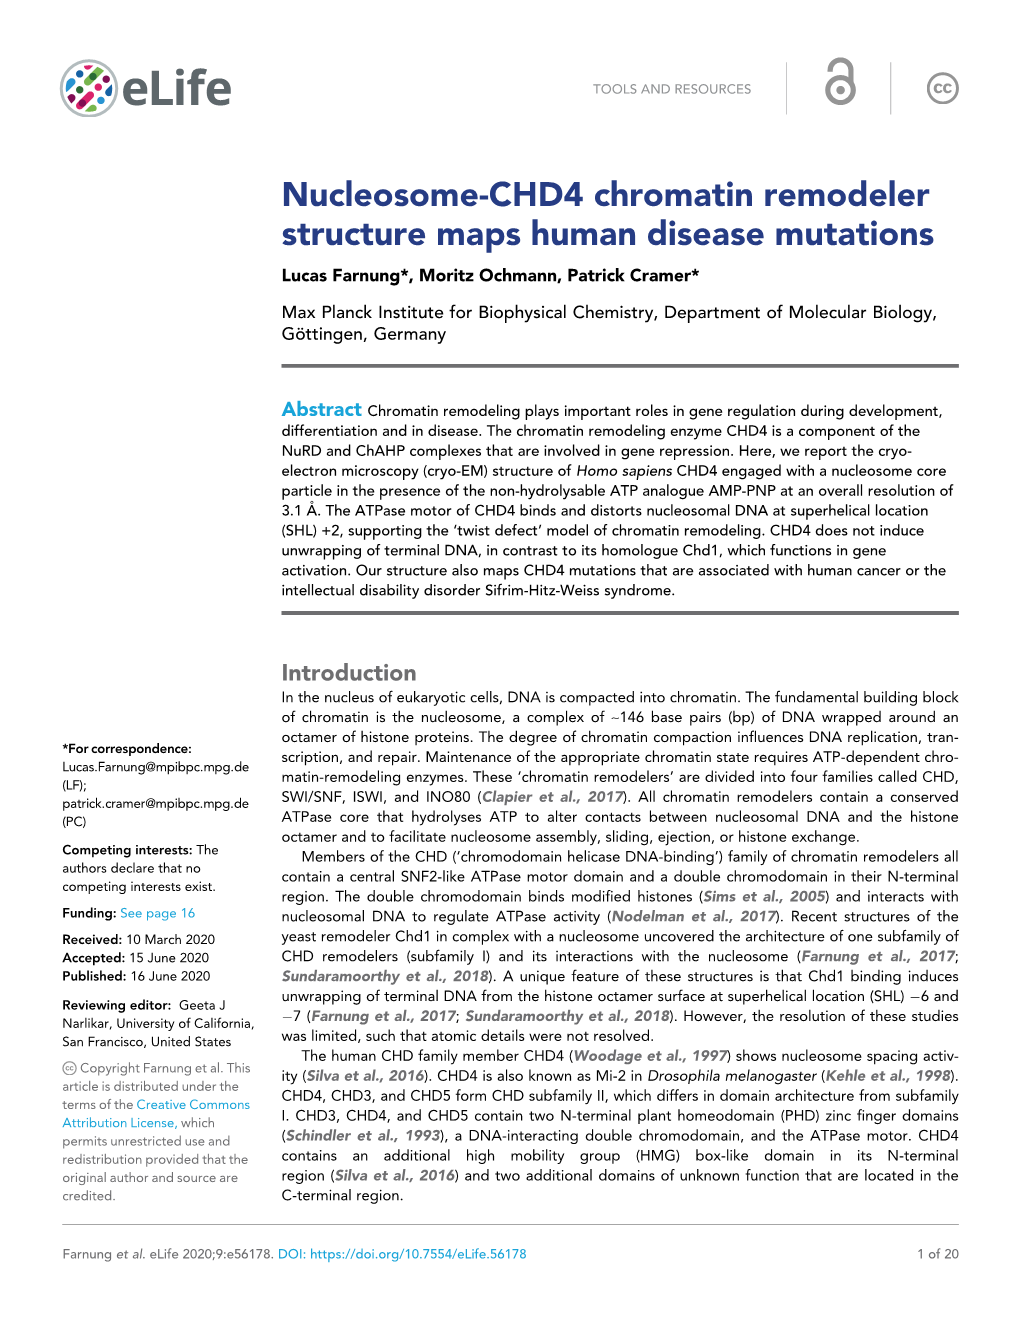 Nucleosome-CHD4 Chromatin Remodeler Structure Maps Human Disease Mutations Lucas Farnung*, Moritz Ochmann, Patrick Cramer*